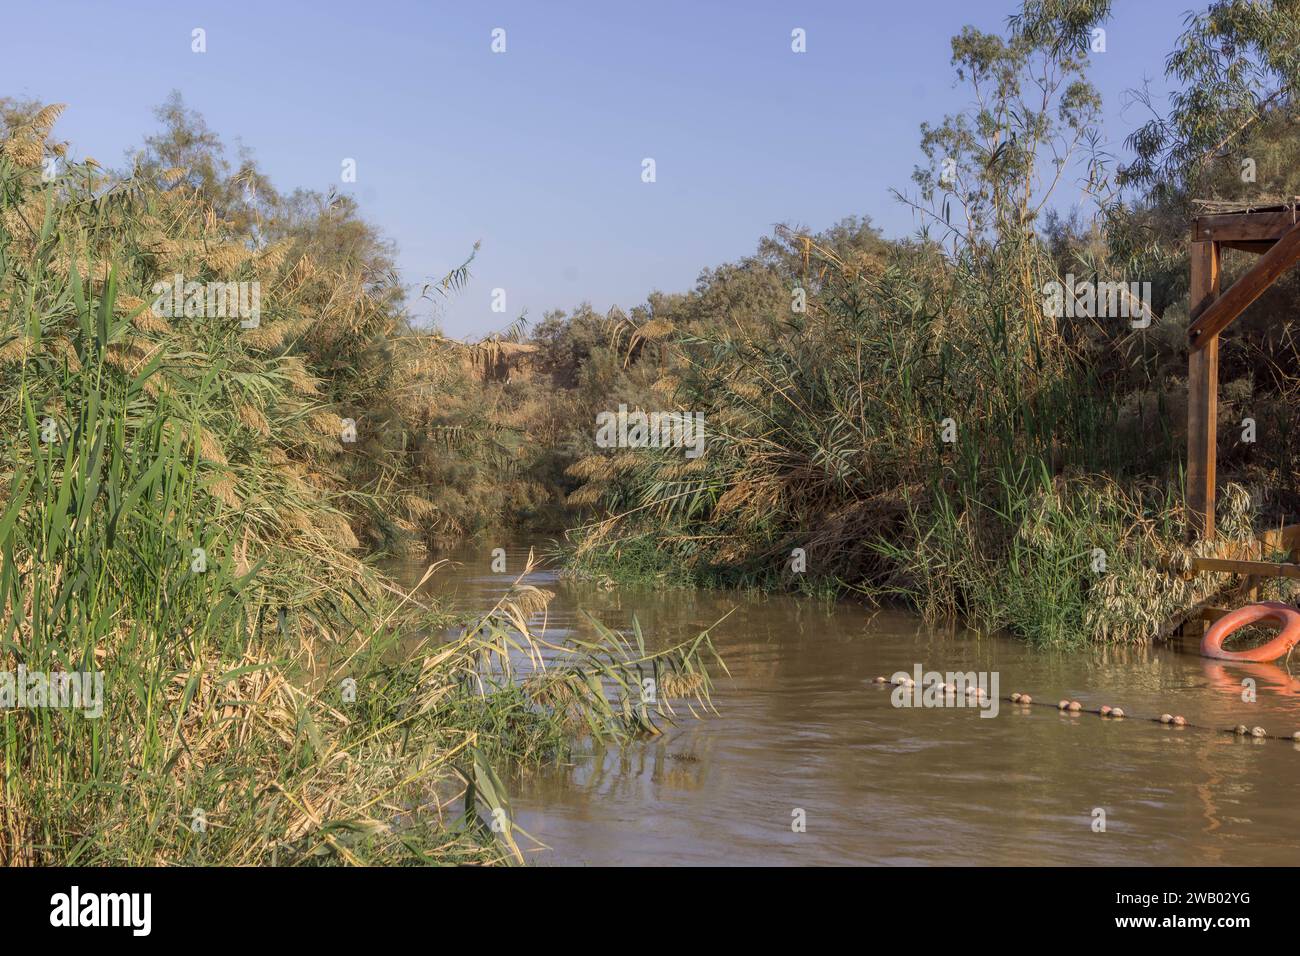 The Jordan river making a border between West Bank, Palestine, and Jordan at Qasr al-Yahud. Stock Photo